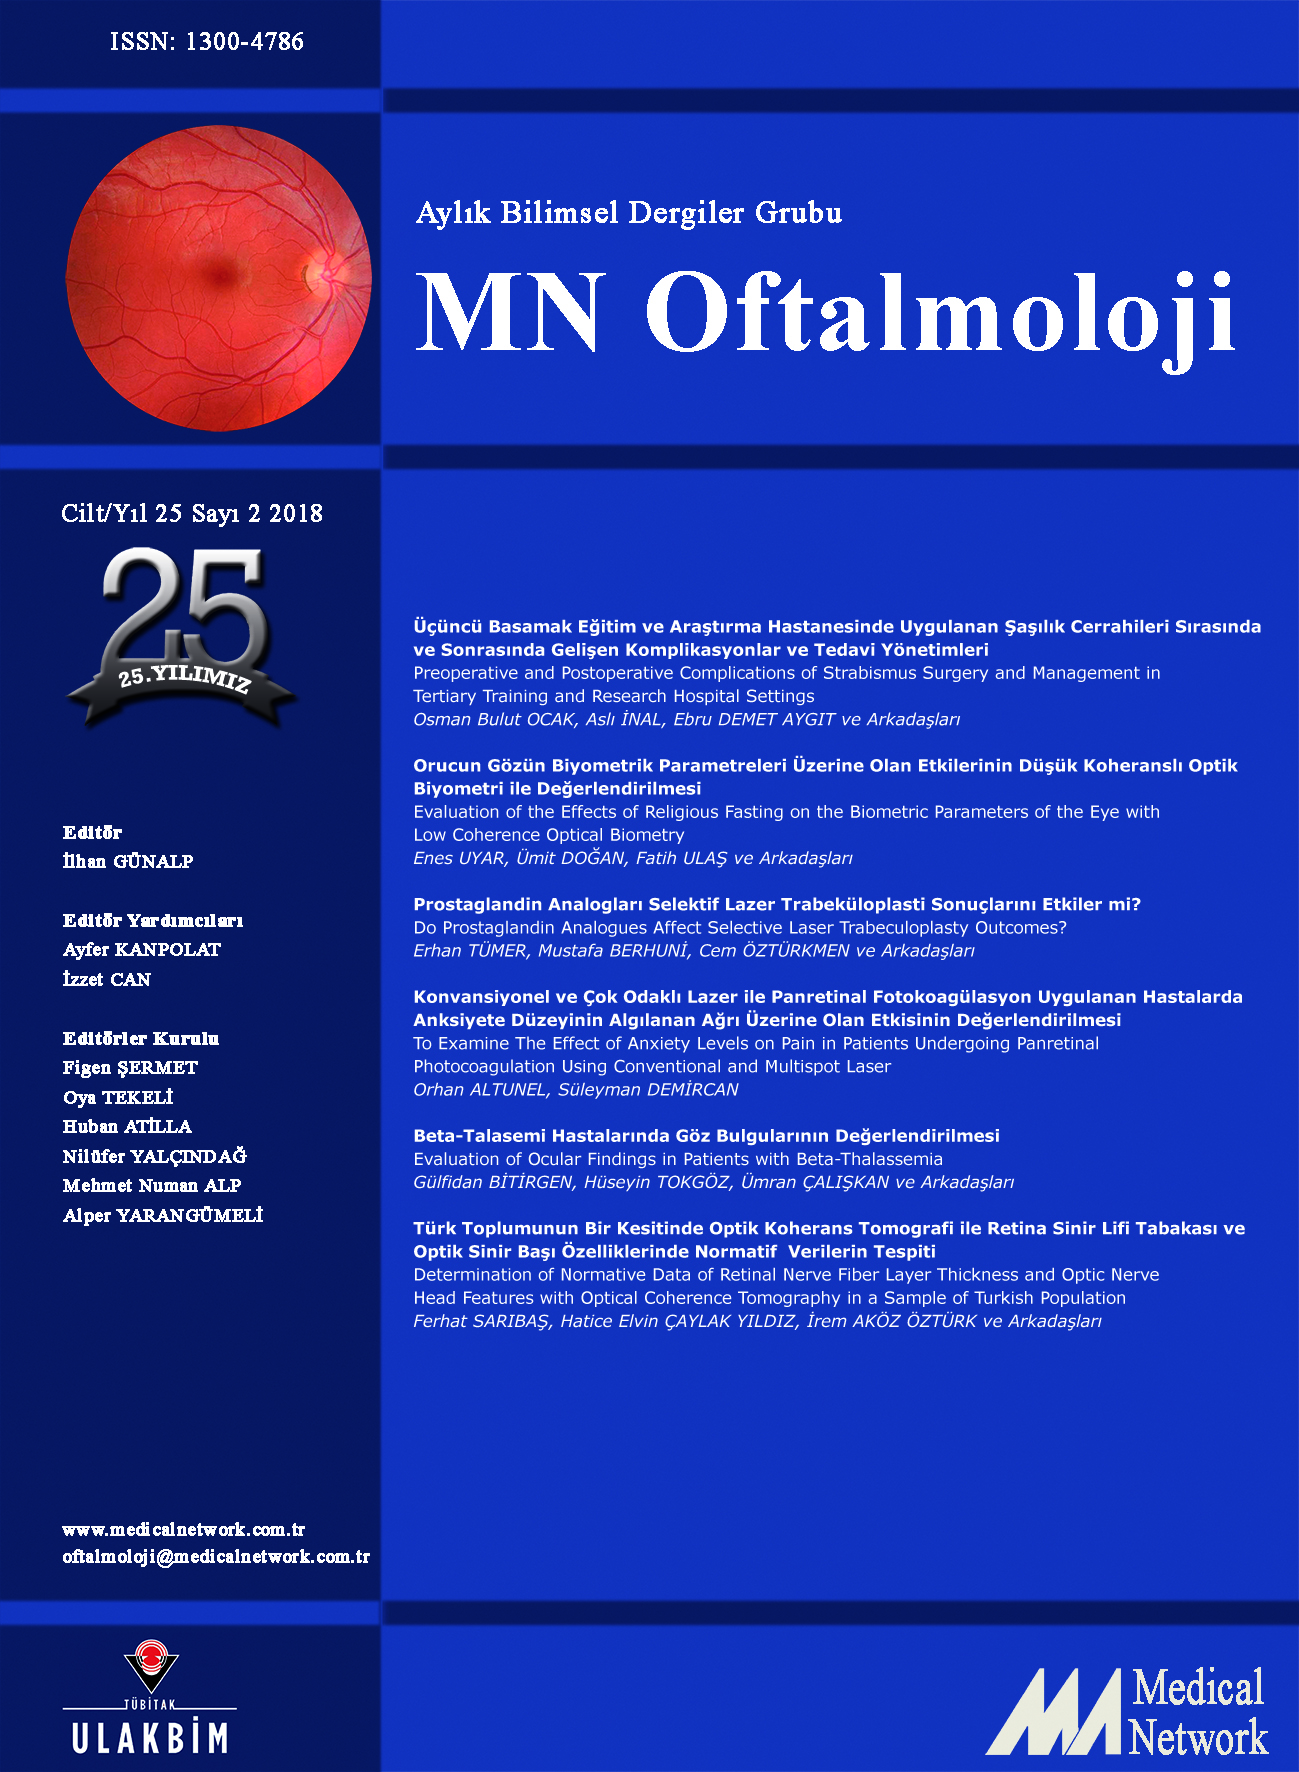 <div>MN Oftalmoloji Cilt: 25 Say: 2 2018 (MN Ophthalmology Volume: 25 No 2 2018)</div>